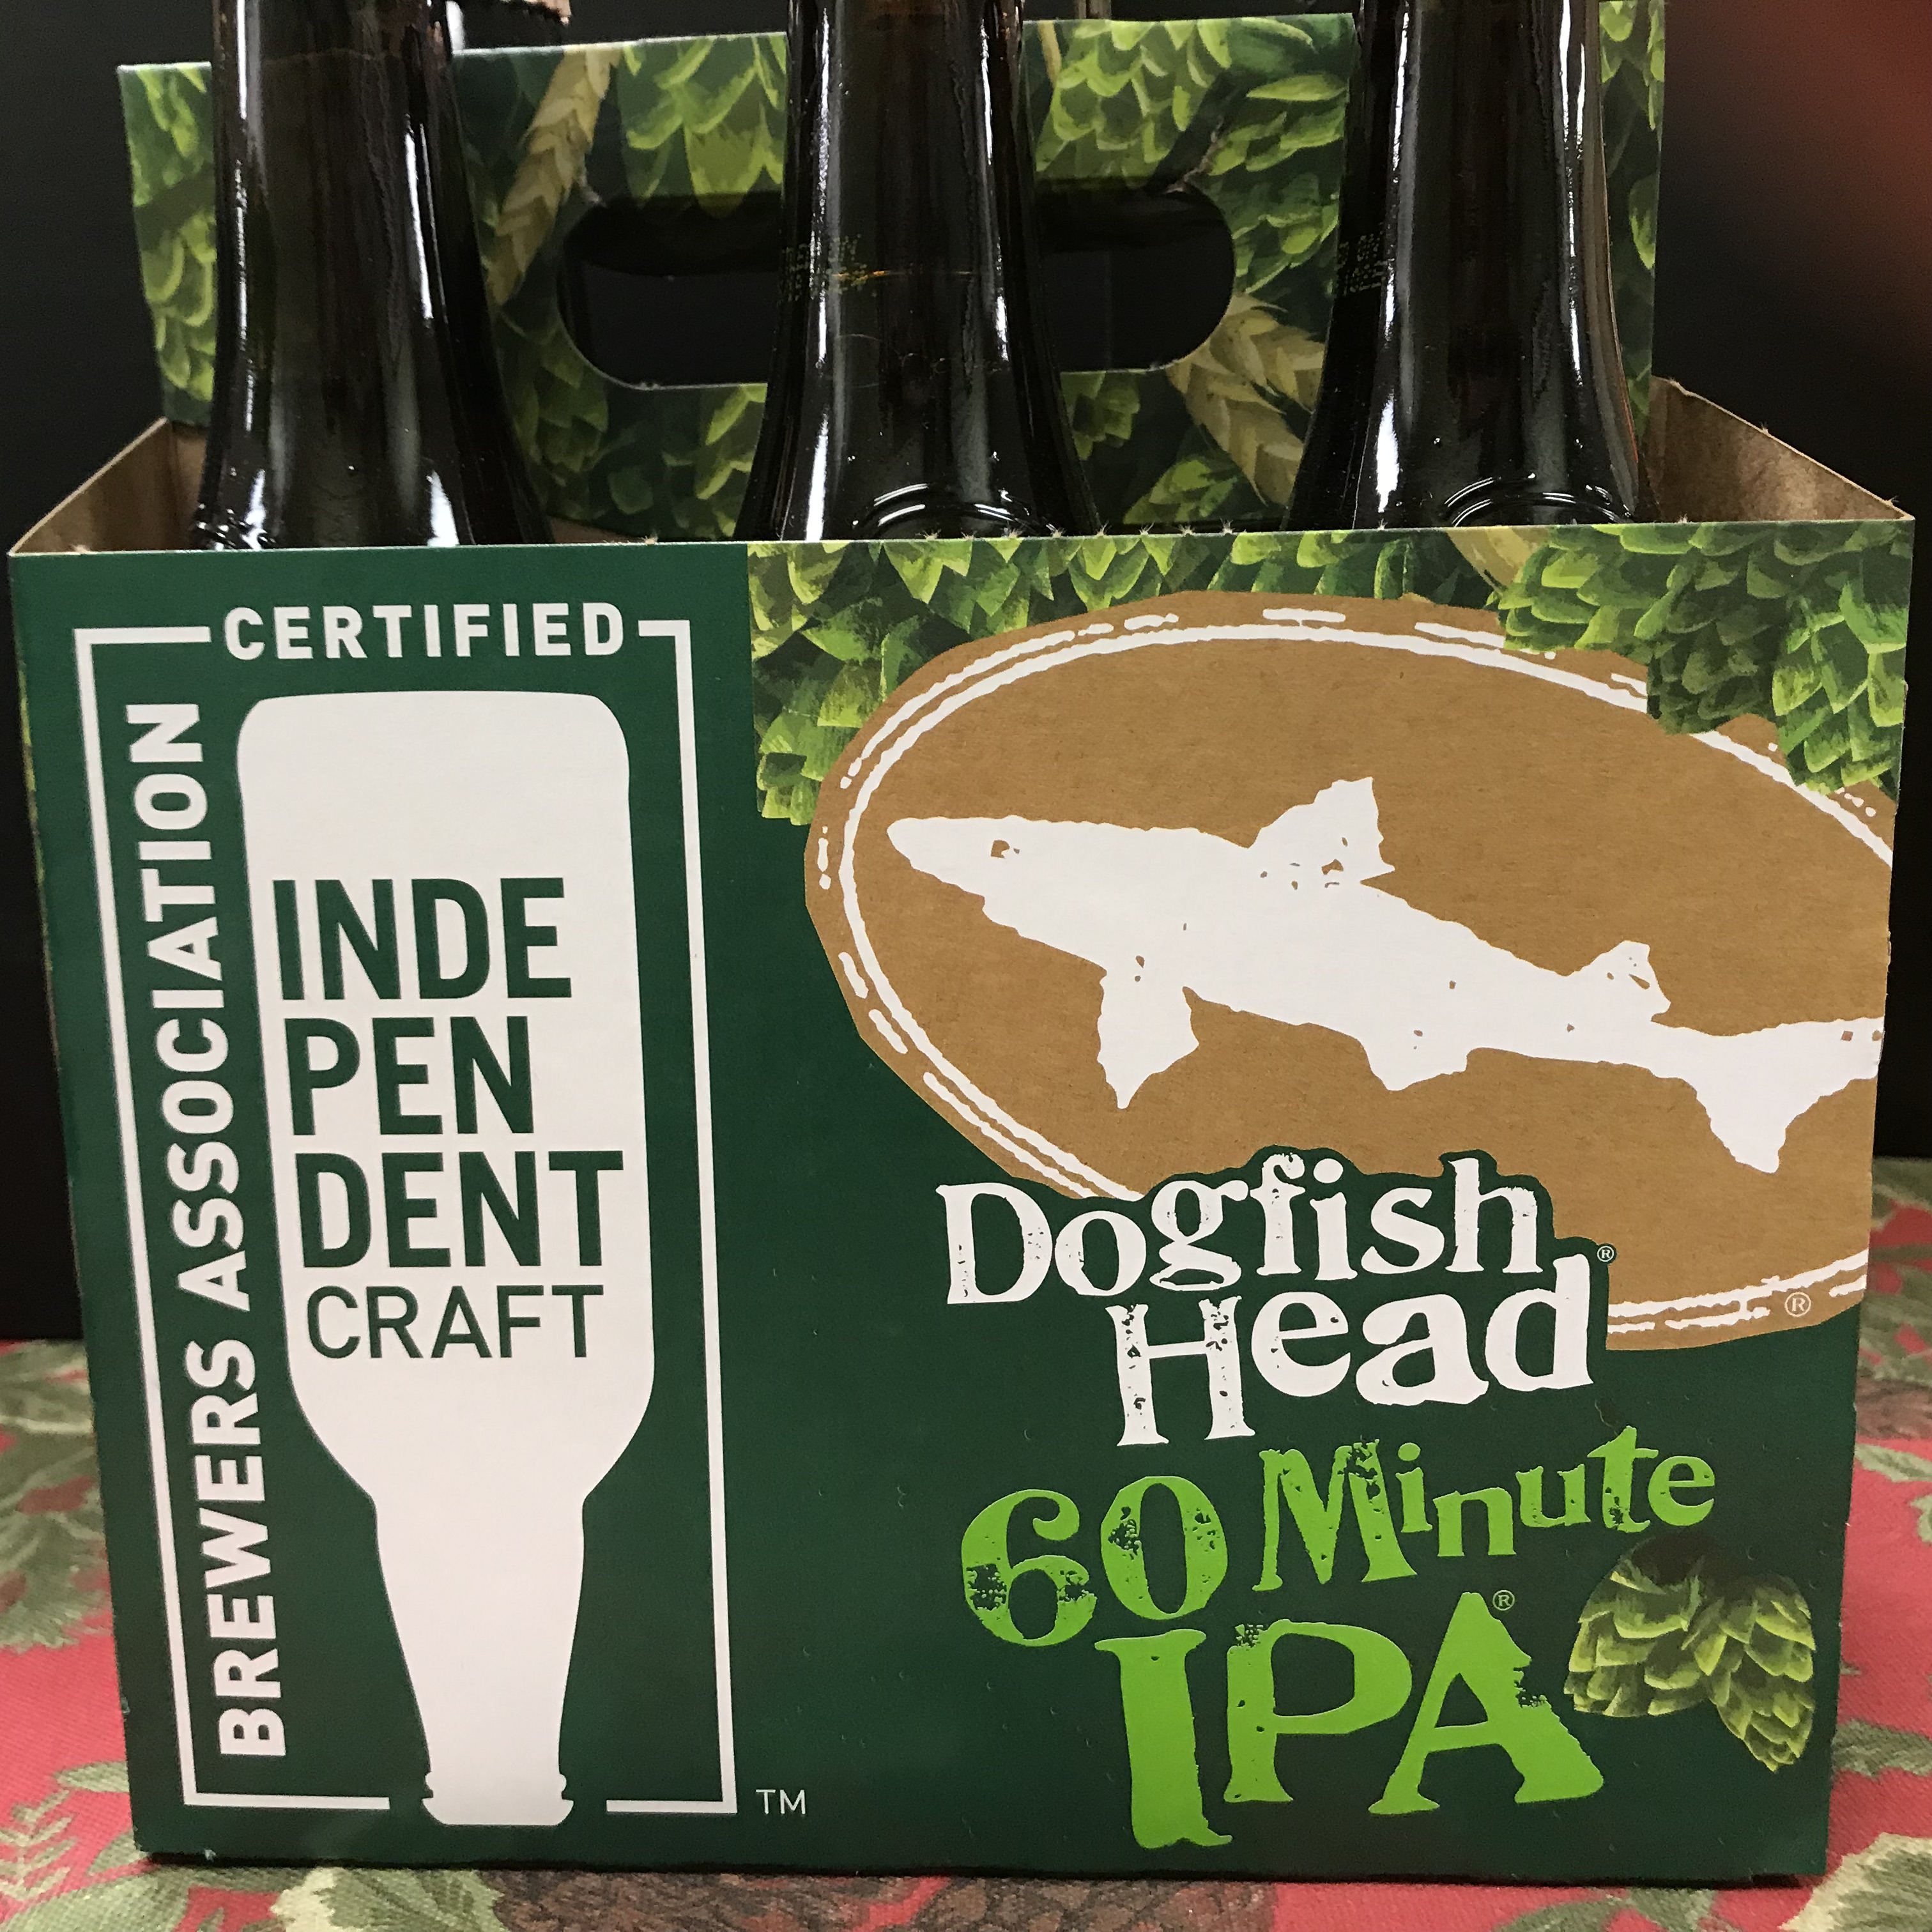 Dogfish Head 60 Minute IPA 6 x 12oz bottles